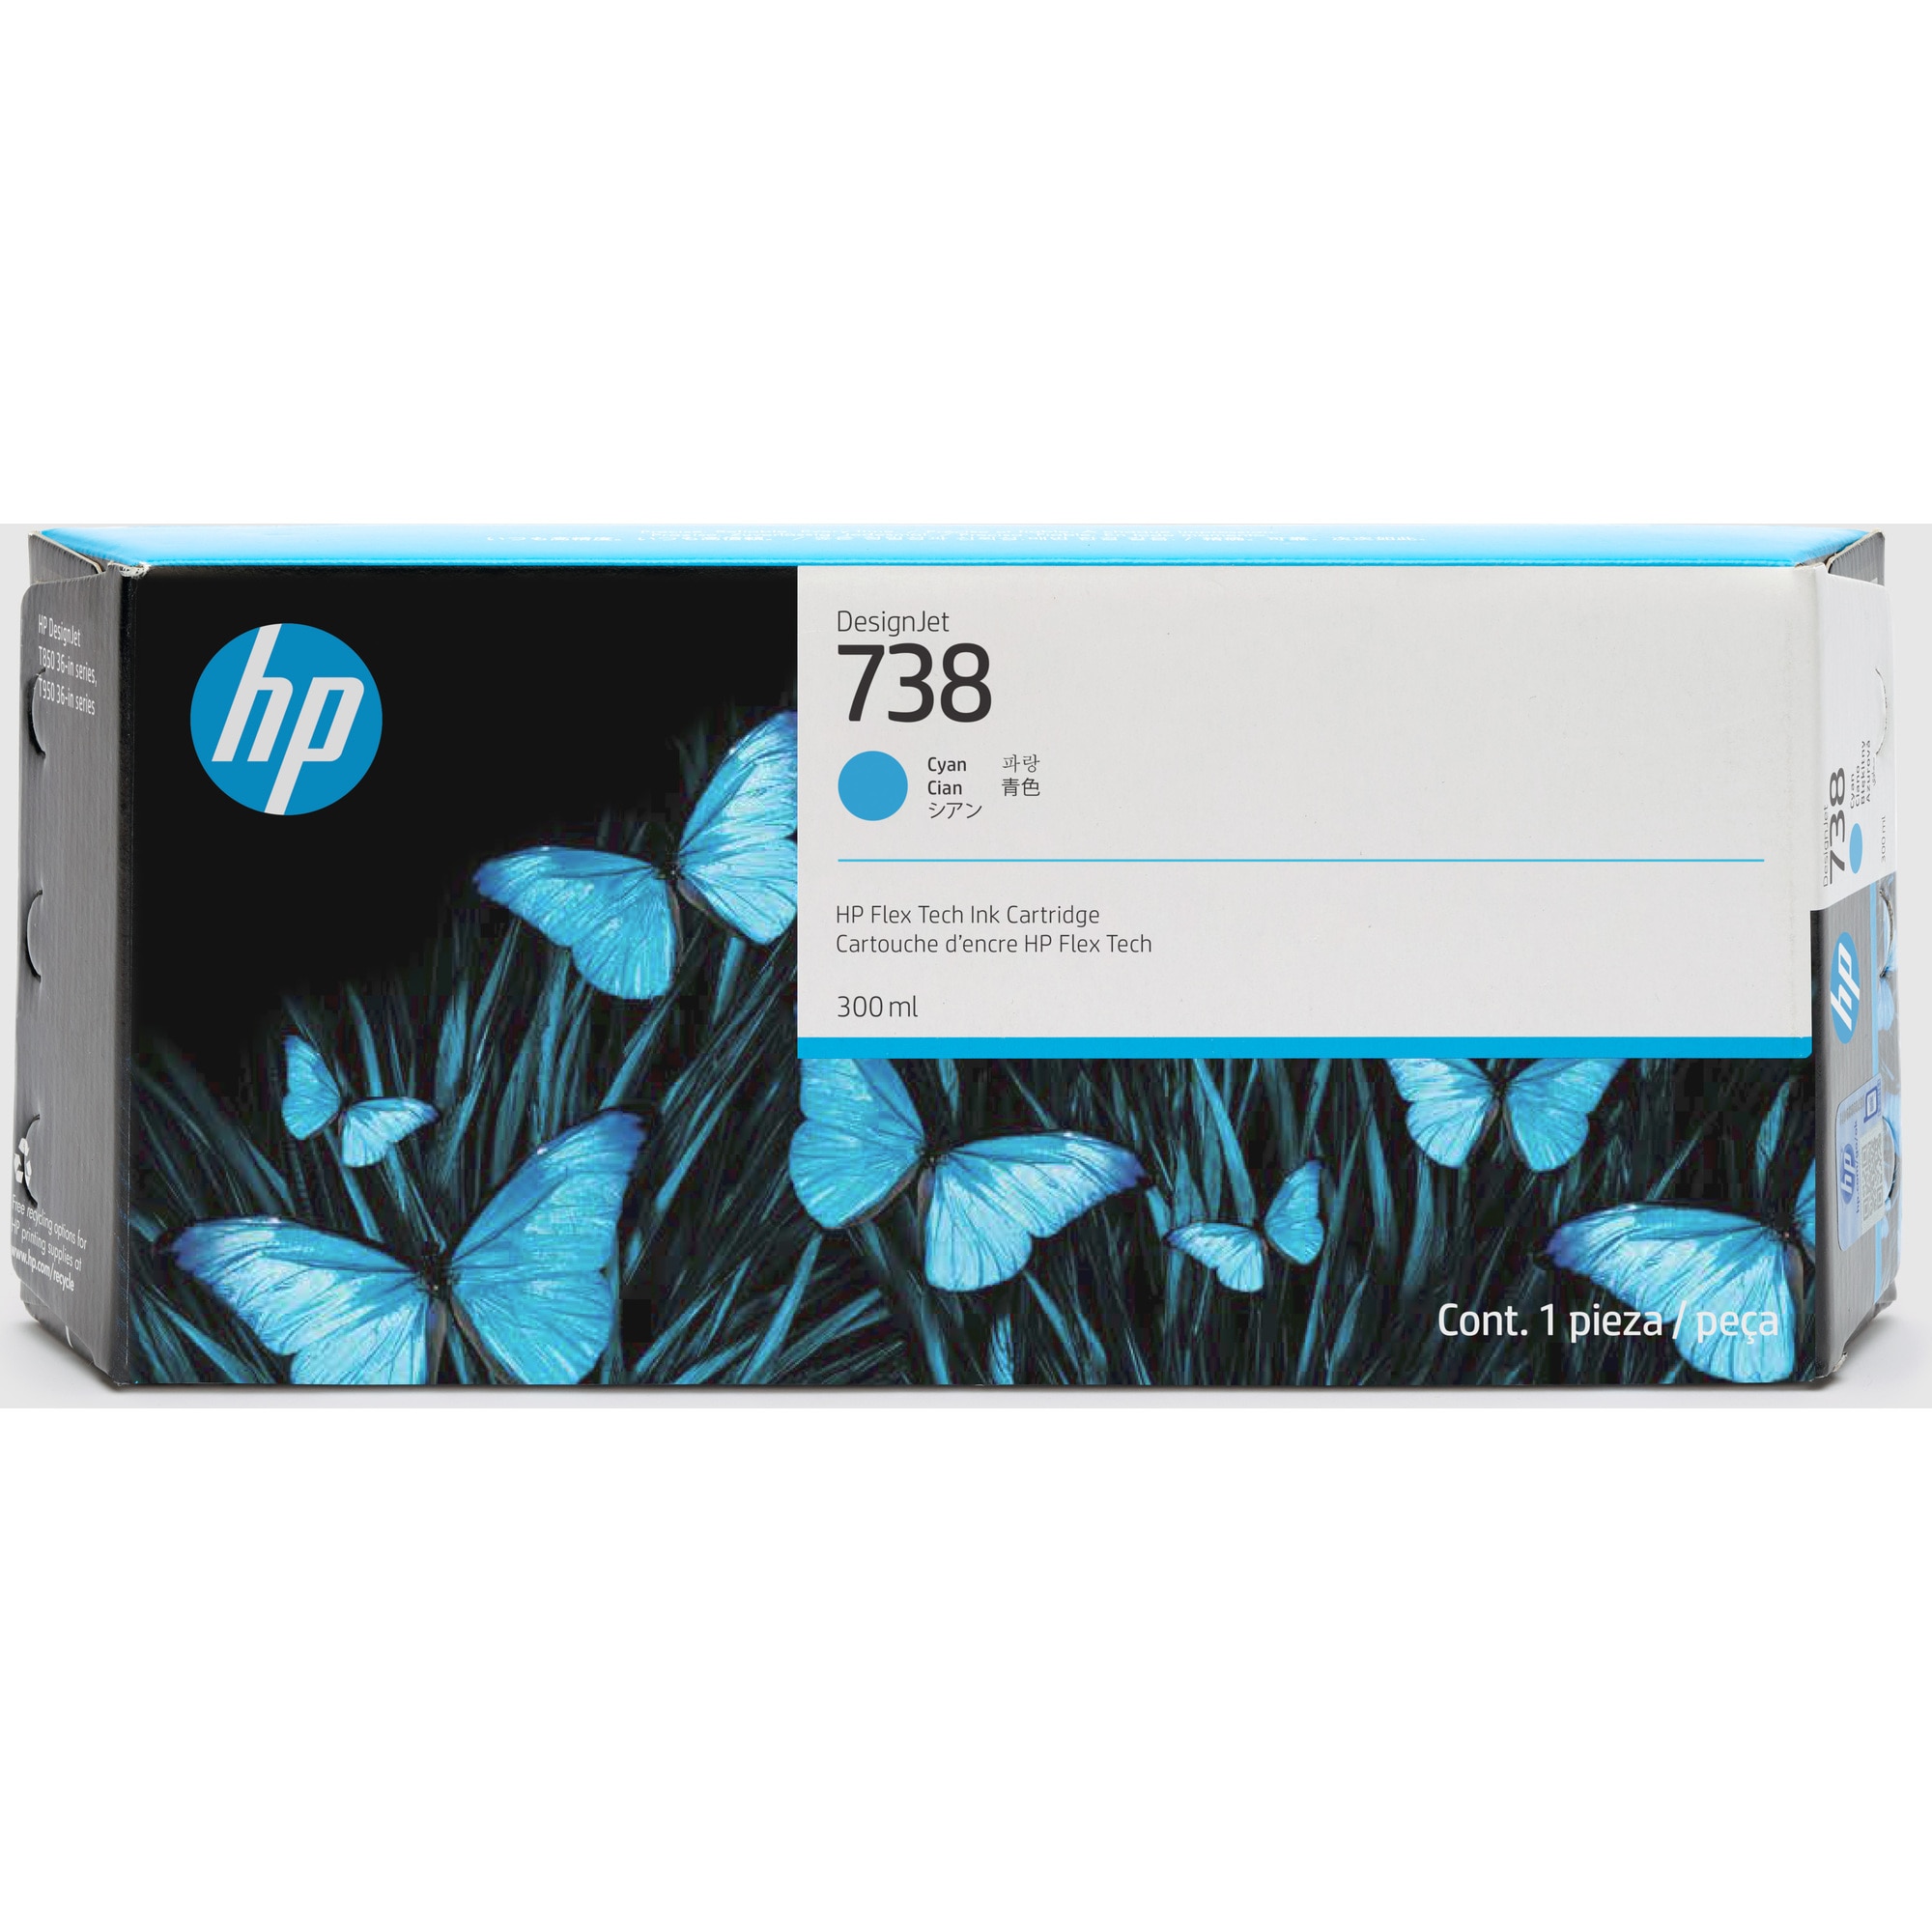 HP 738 300-ml Cyan DesignJet Ink Cartridge7 